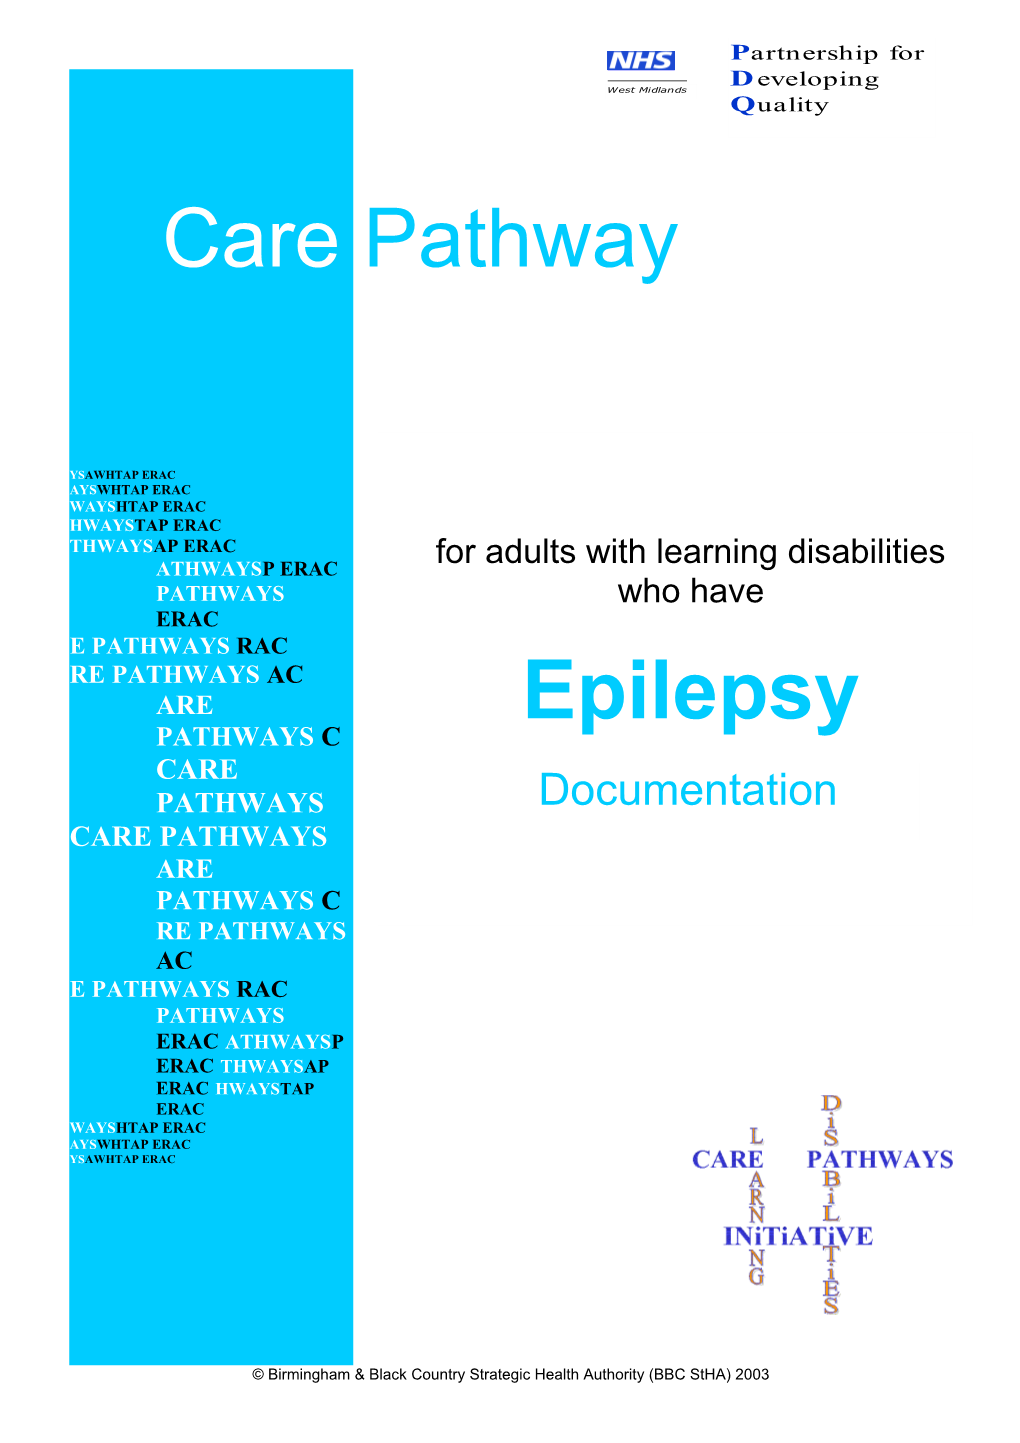 Epilepsy Care Pathway